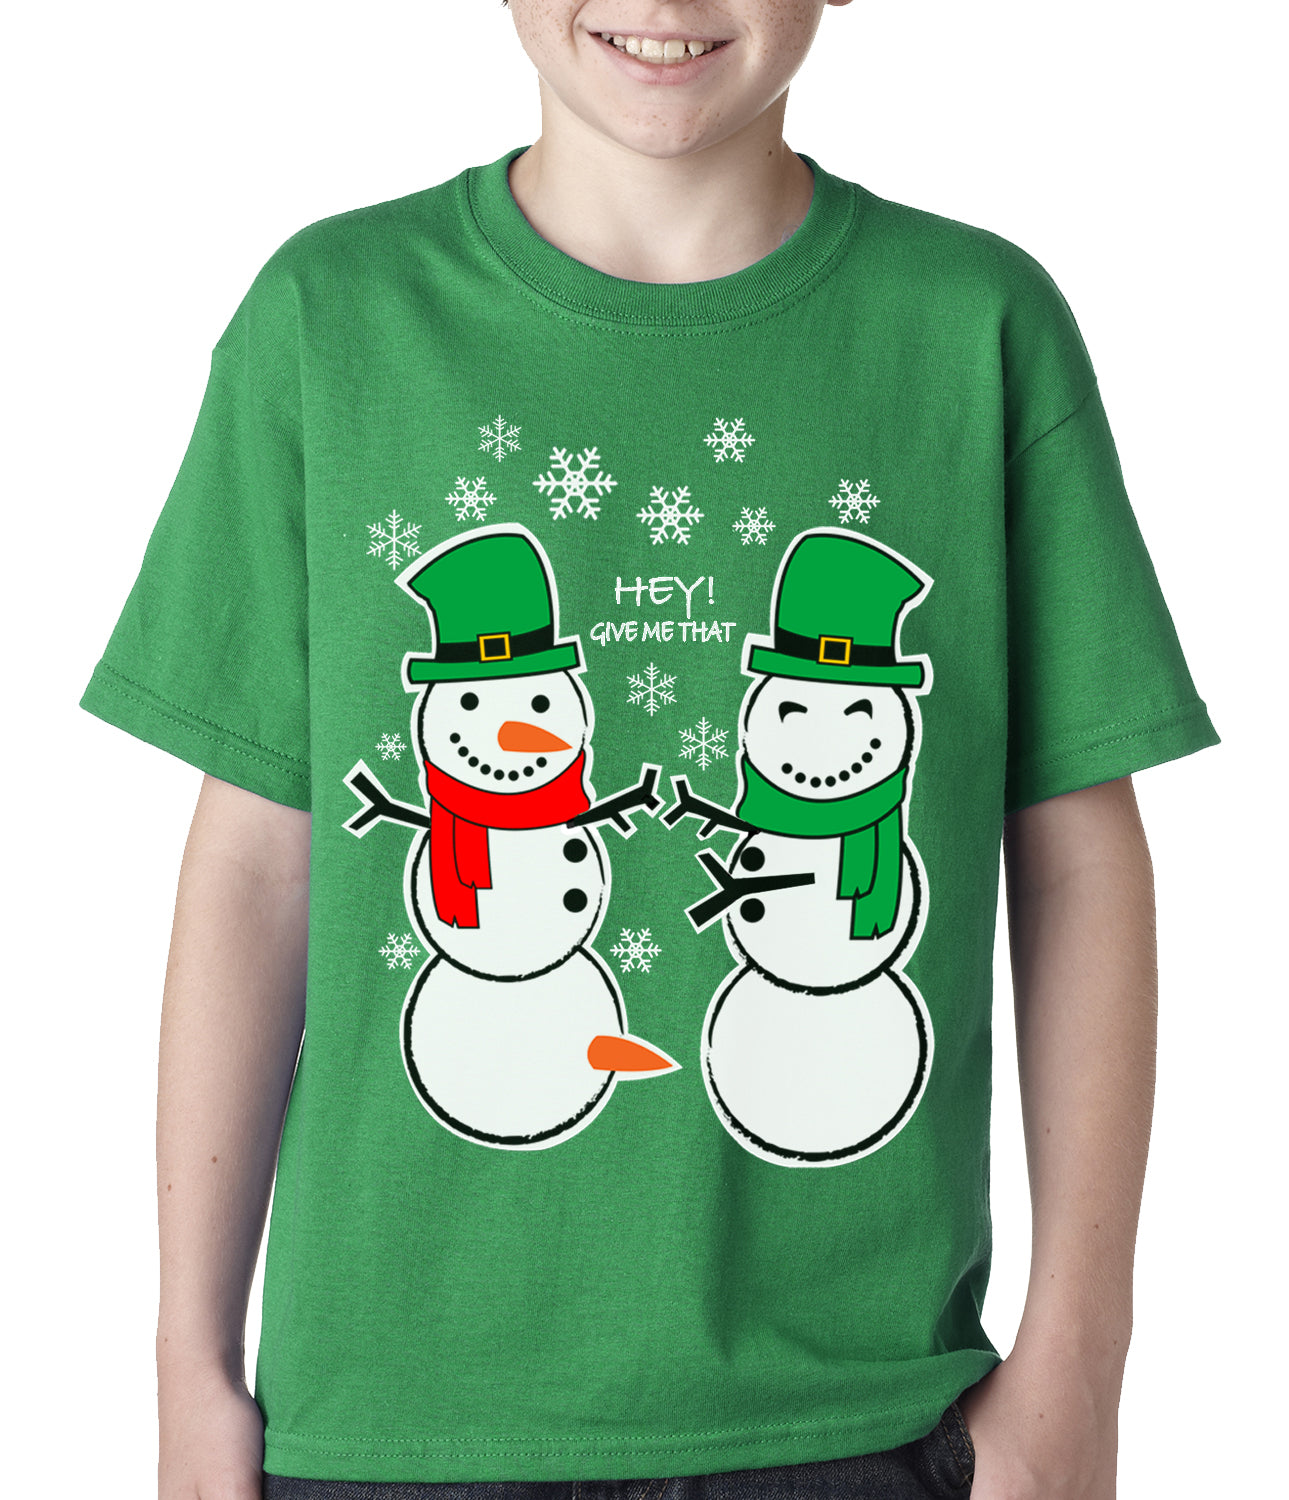 Christmas t shirt made by me  Christmas tshirts, Boys christmas t shirt,  Christmas t shirt design